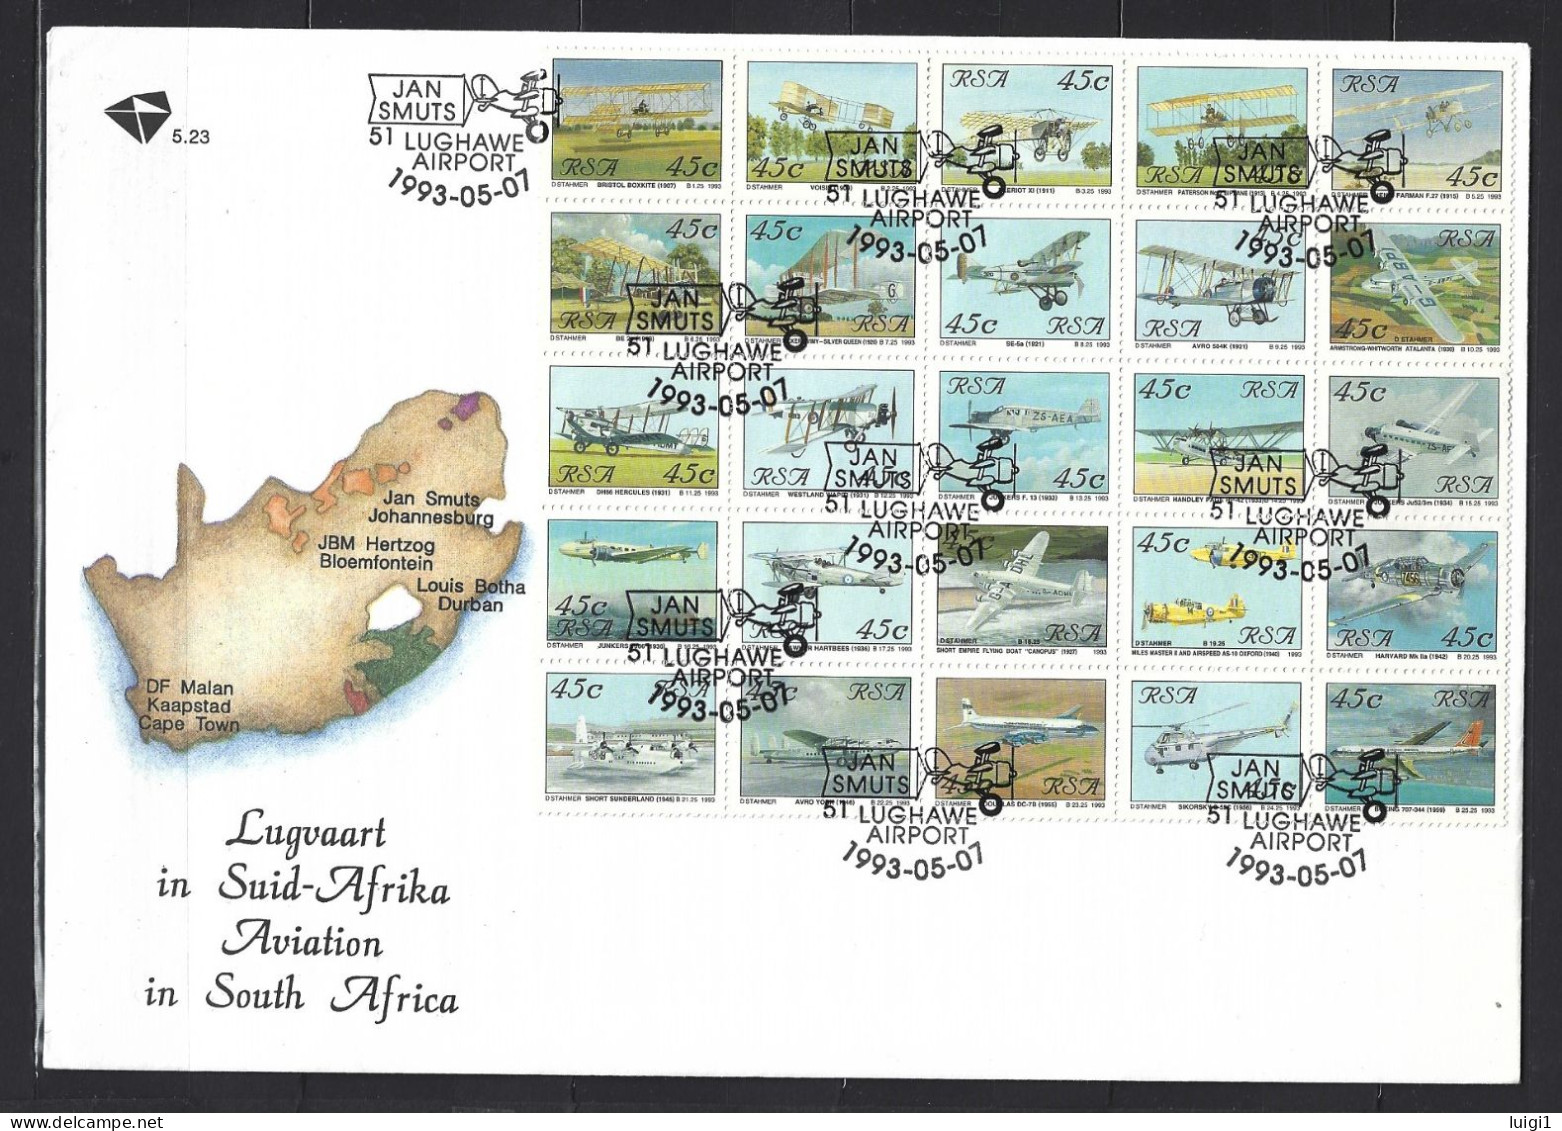 SOUTH AFRICA1993 - Bloc-feuillet Aviation Sud Africaine . Oblitération Du 1993-05-07. JAN SMUTS 51 LUGHAWE AIRPORT. - Cartas & Documentos